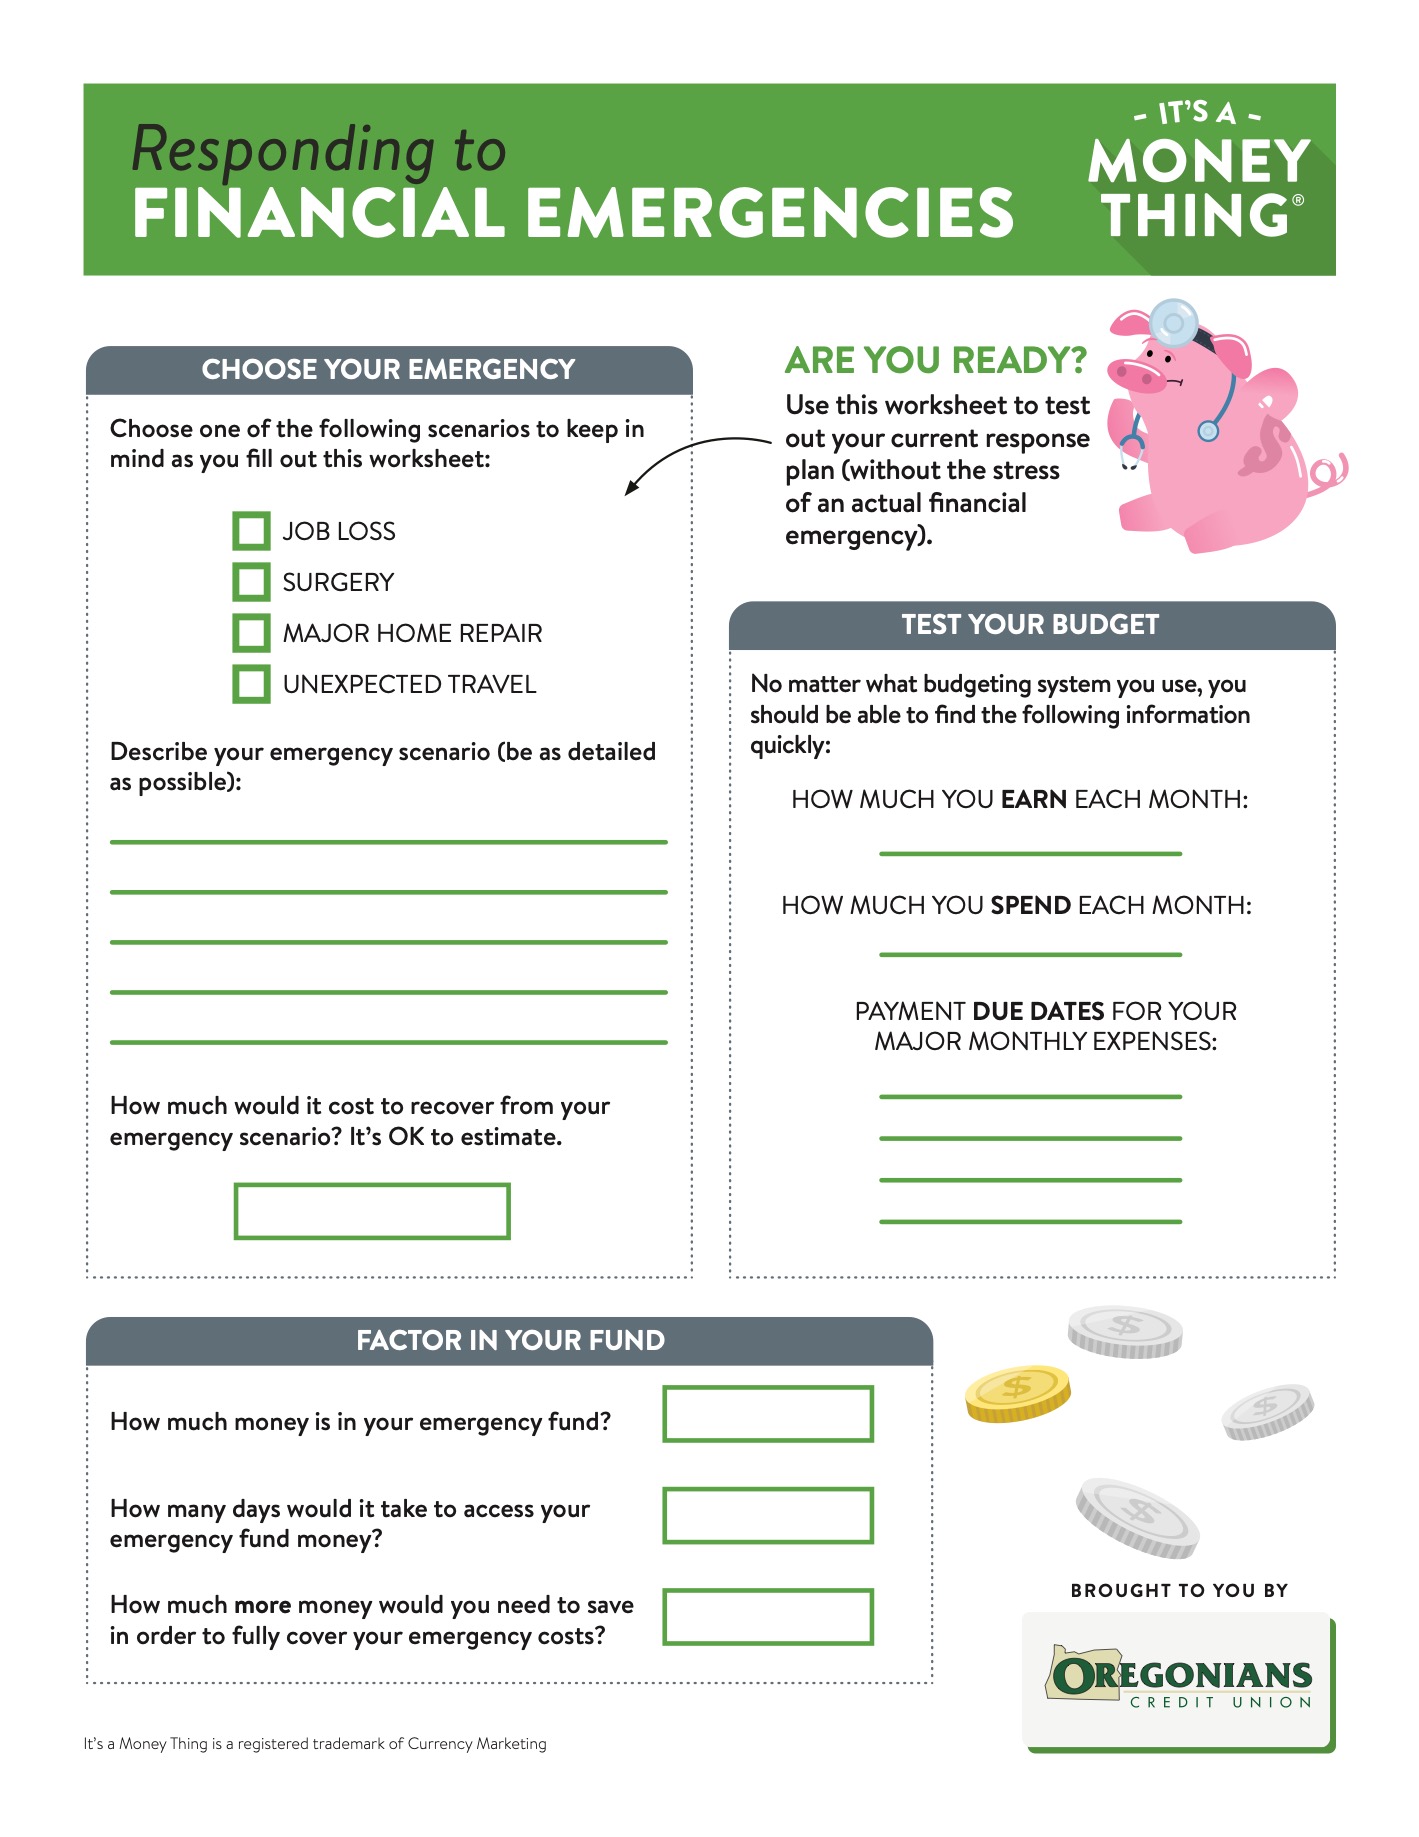 Responding to financial emergencies image - Handout image